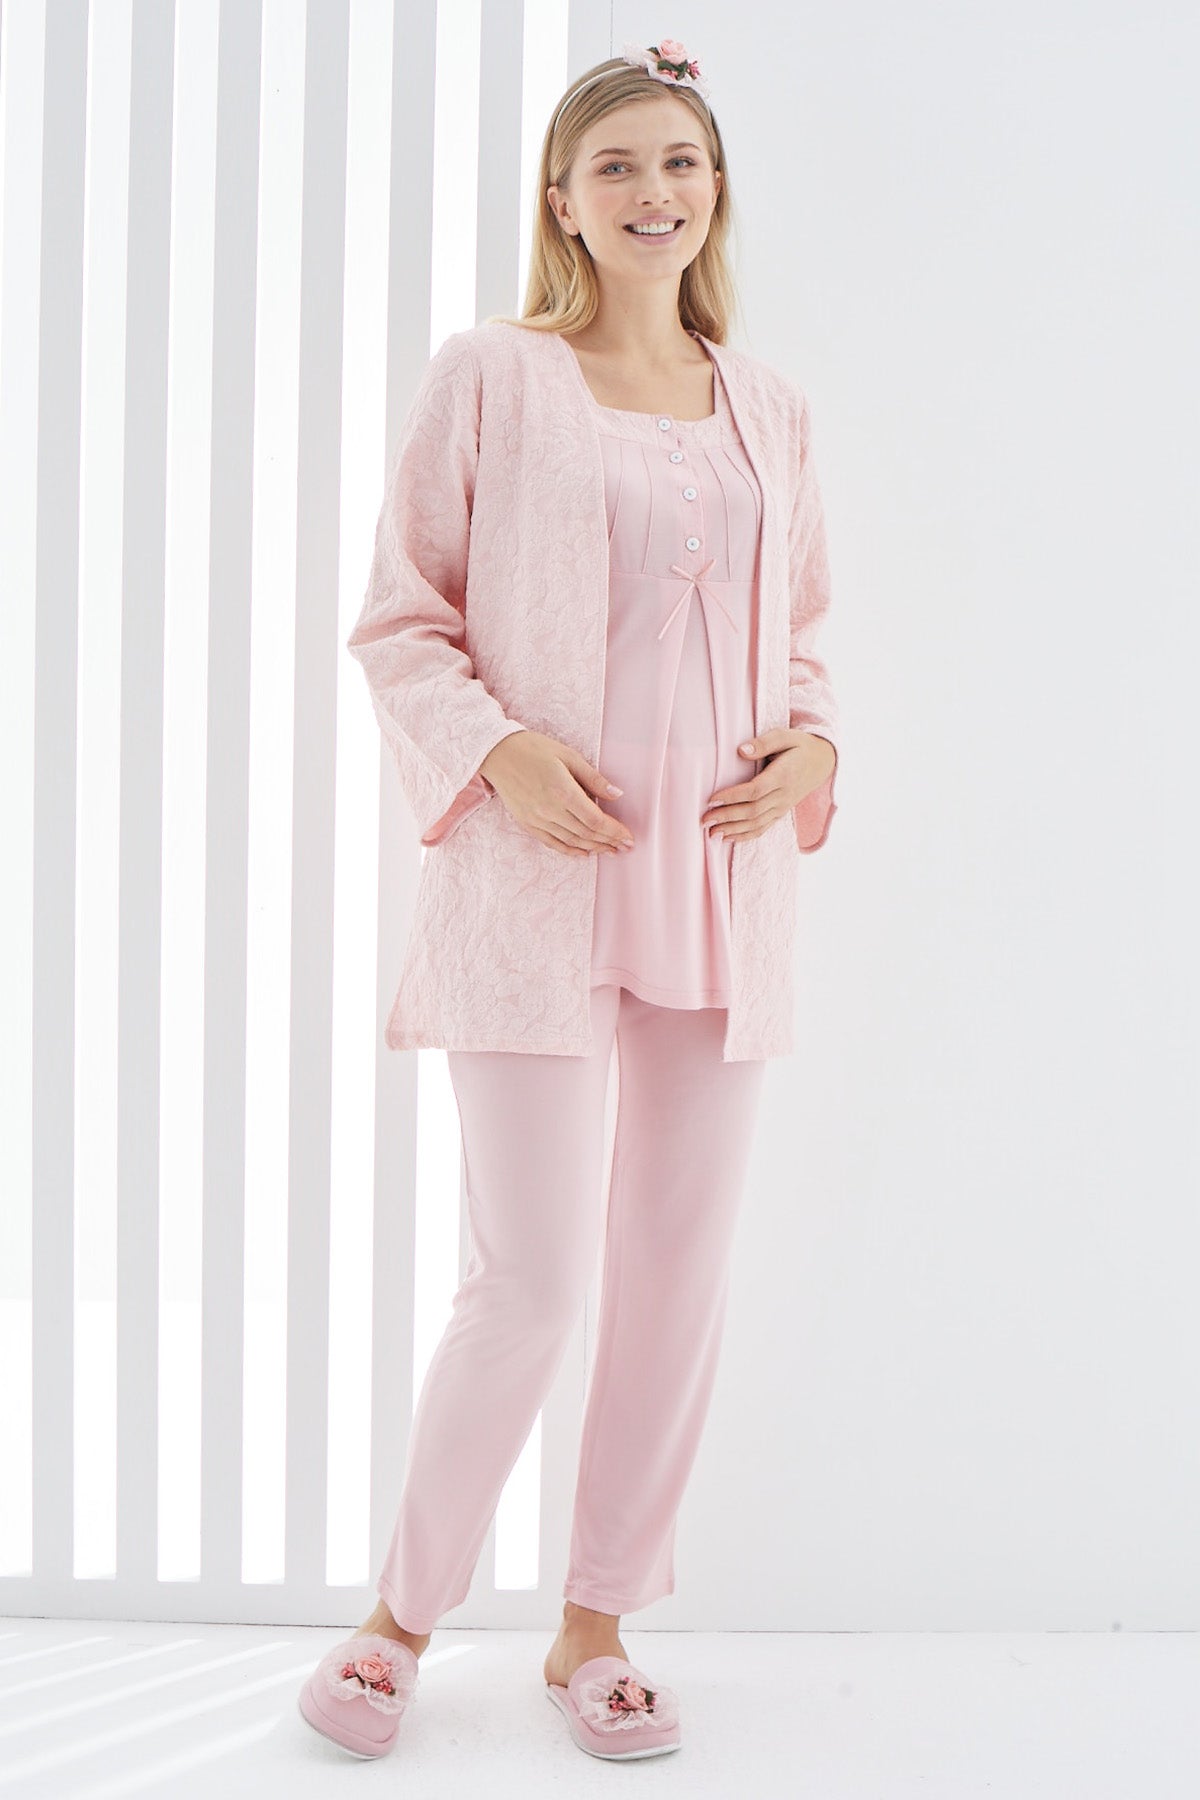 Shopymommy 3405 Lace 3-Pieces Maternity & Nursing Pajamas With Jacquard Robe Powder